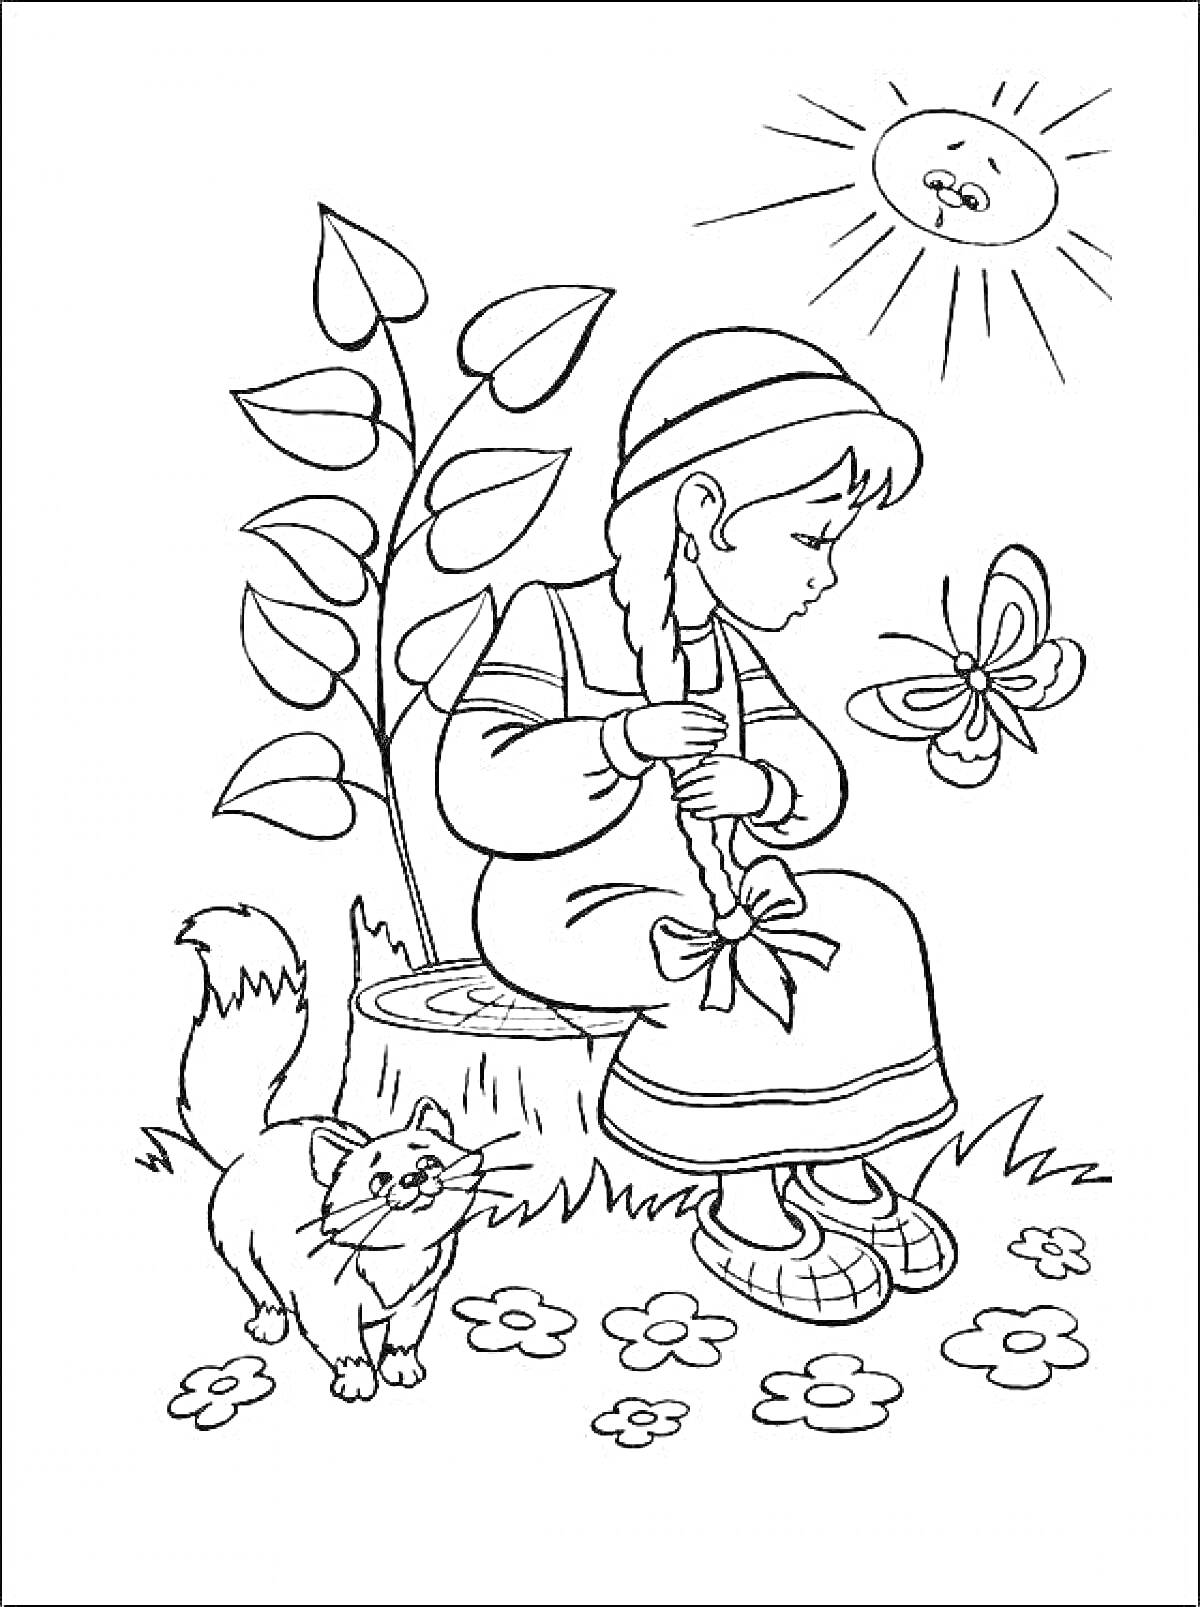 Раскраска Девочка в народном костюме сидит на пне, рядом кот, цветы и бабочка, на заднем плане дерево и солнце